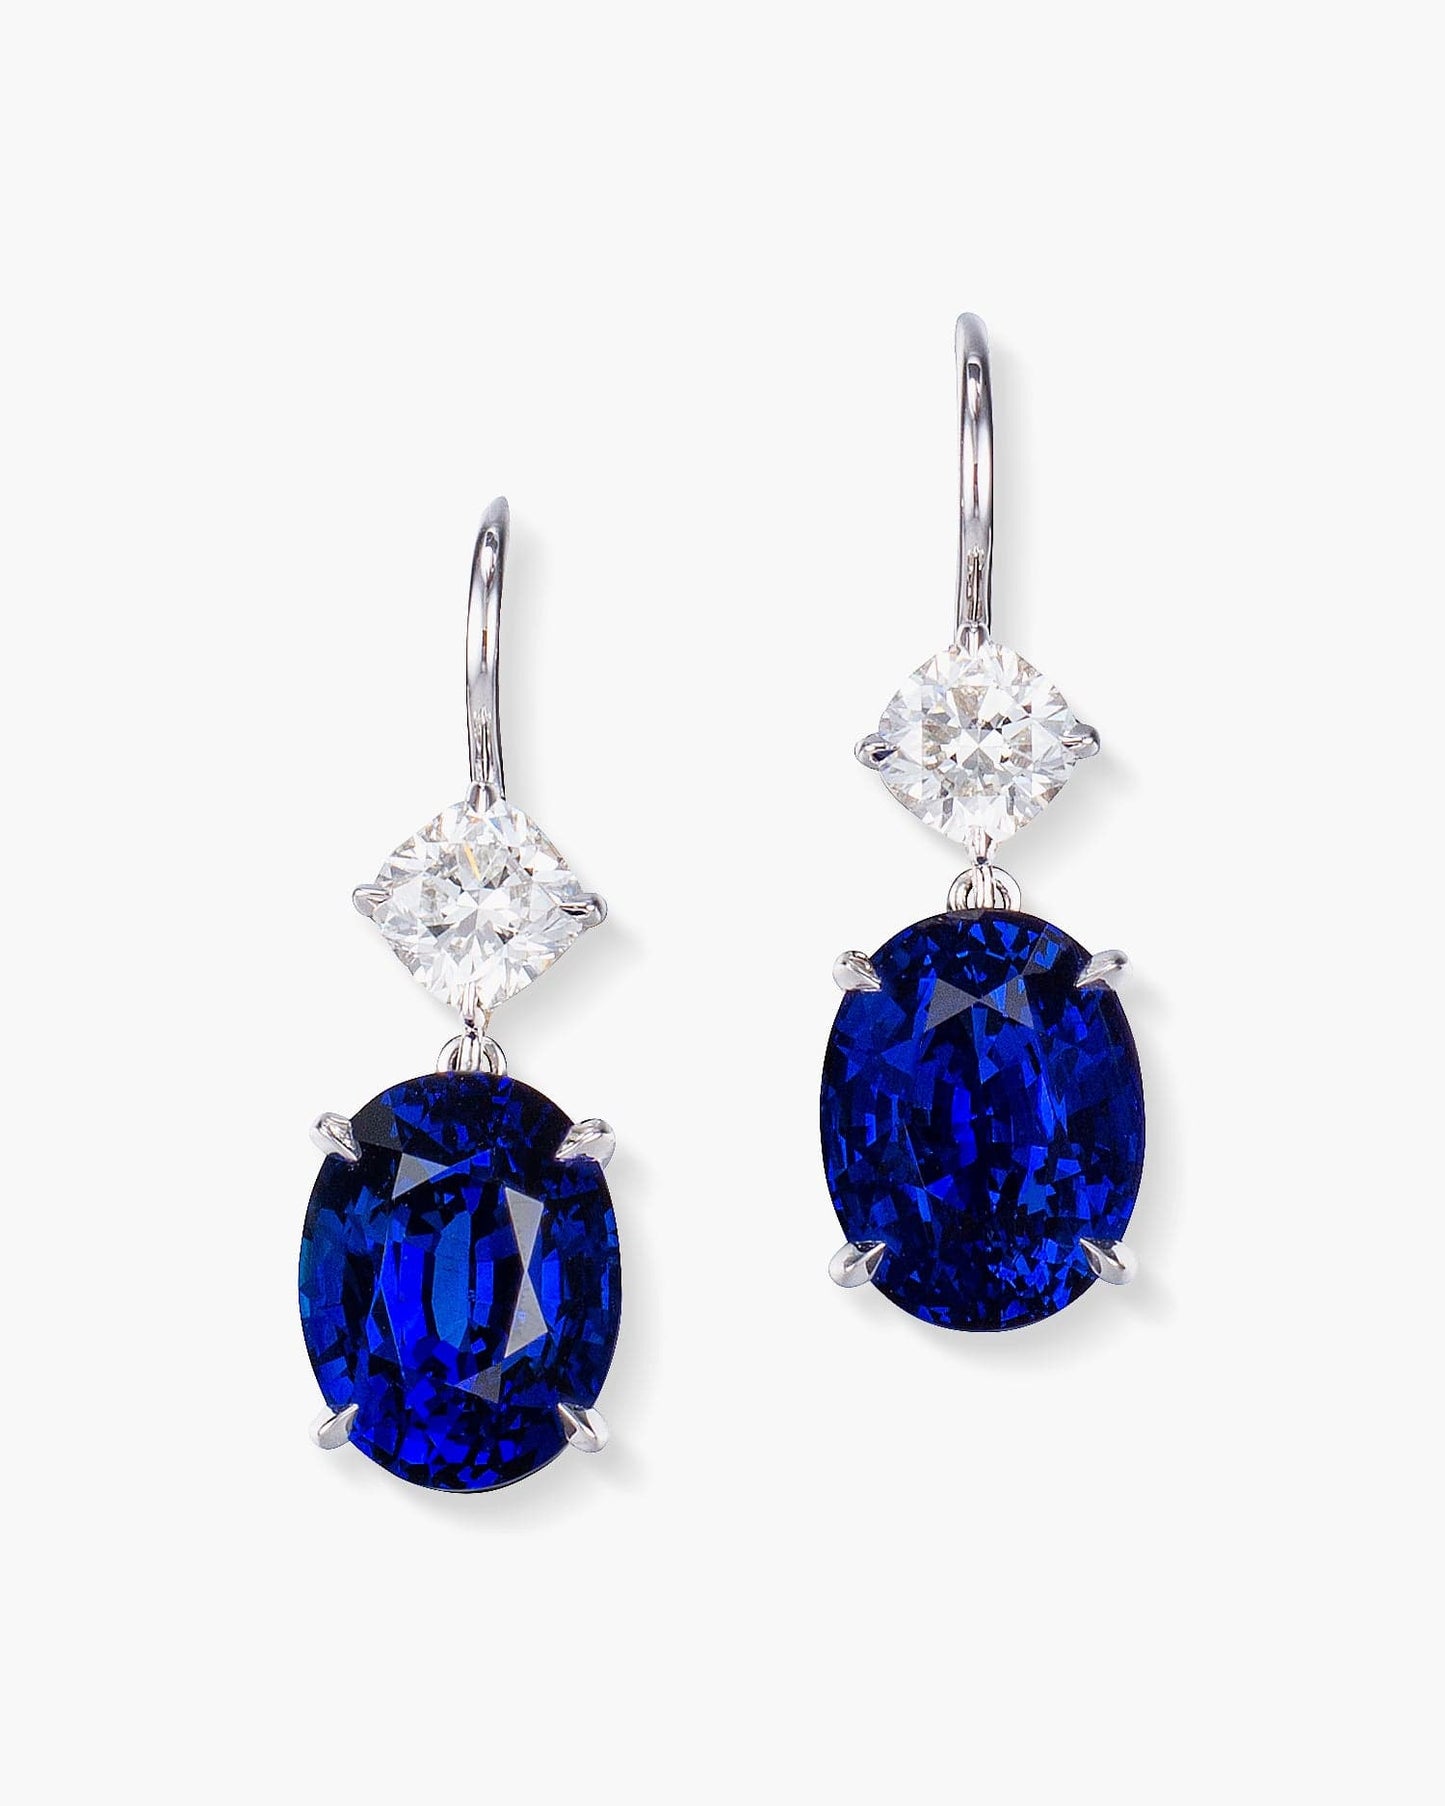 6.22 carat Oval Shape Ceylon Sapphire and Diamond Earrings